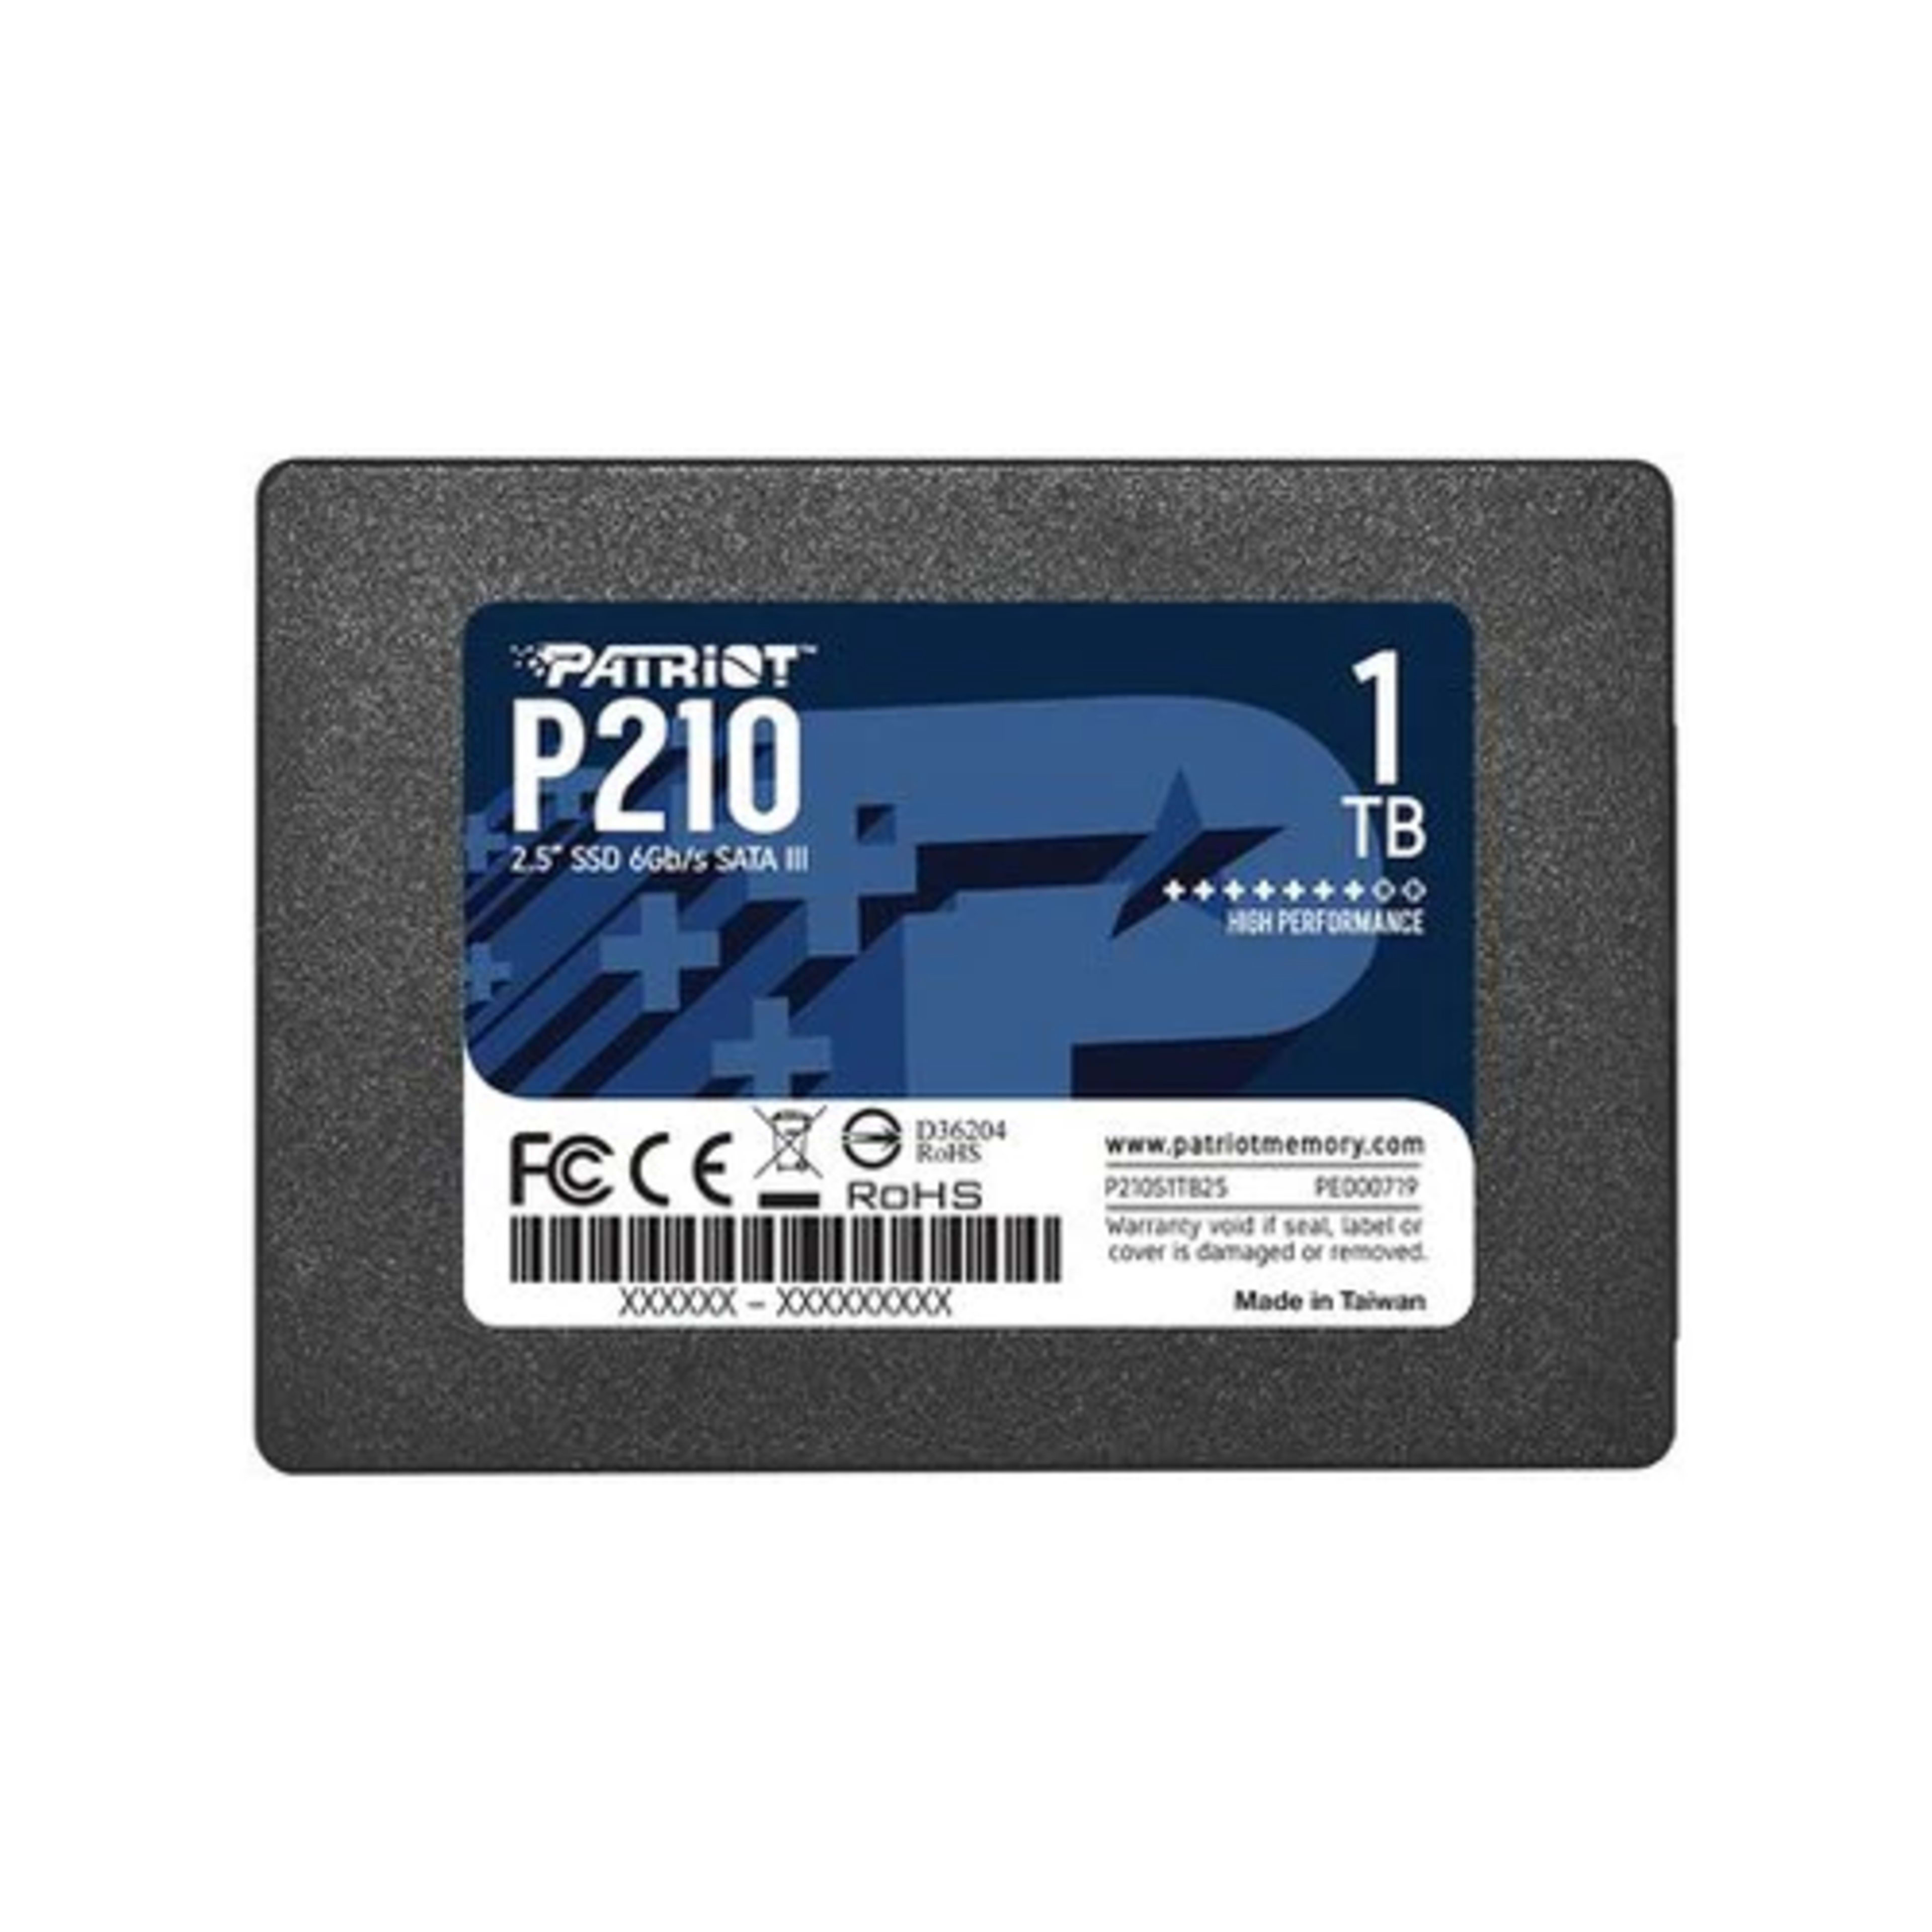 Patriot P210 1TB Internal SSD - SATA 3 2.5" - Solid State Drive